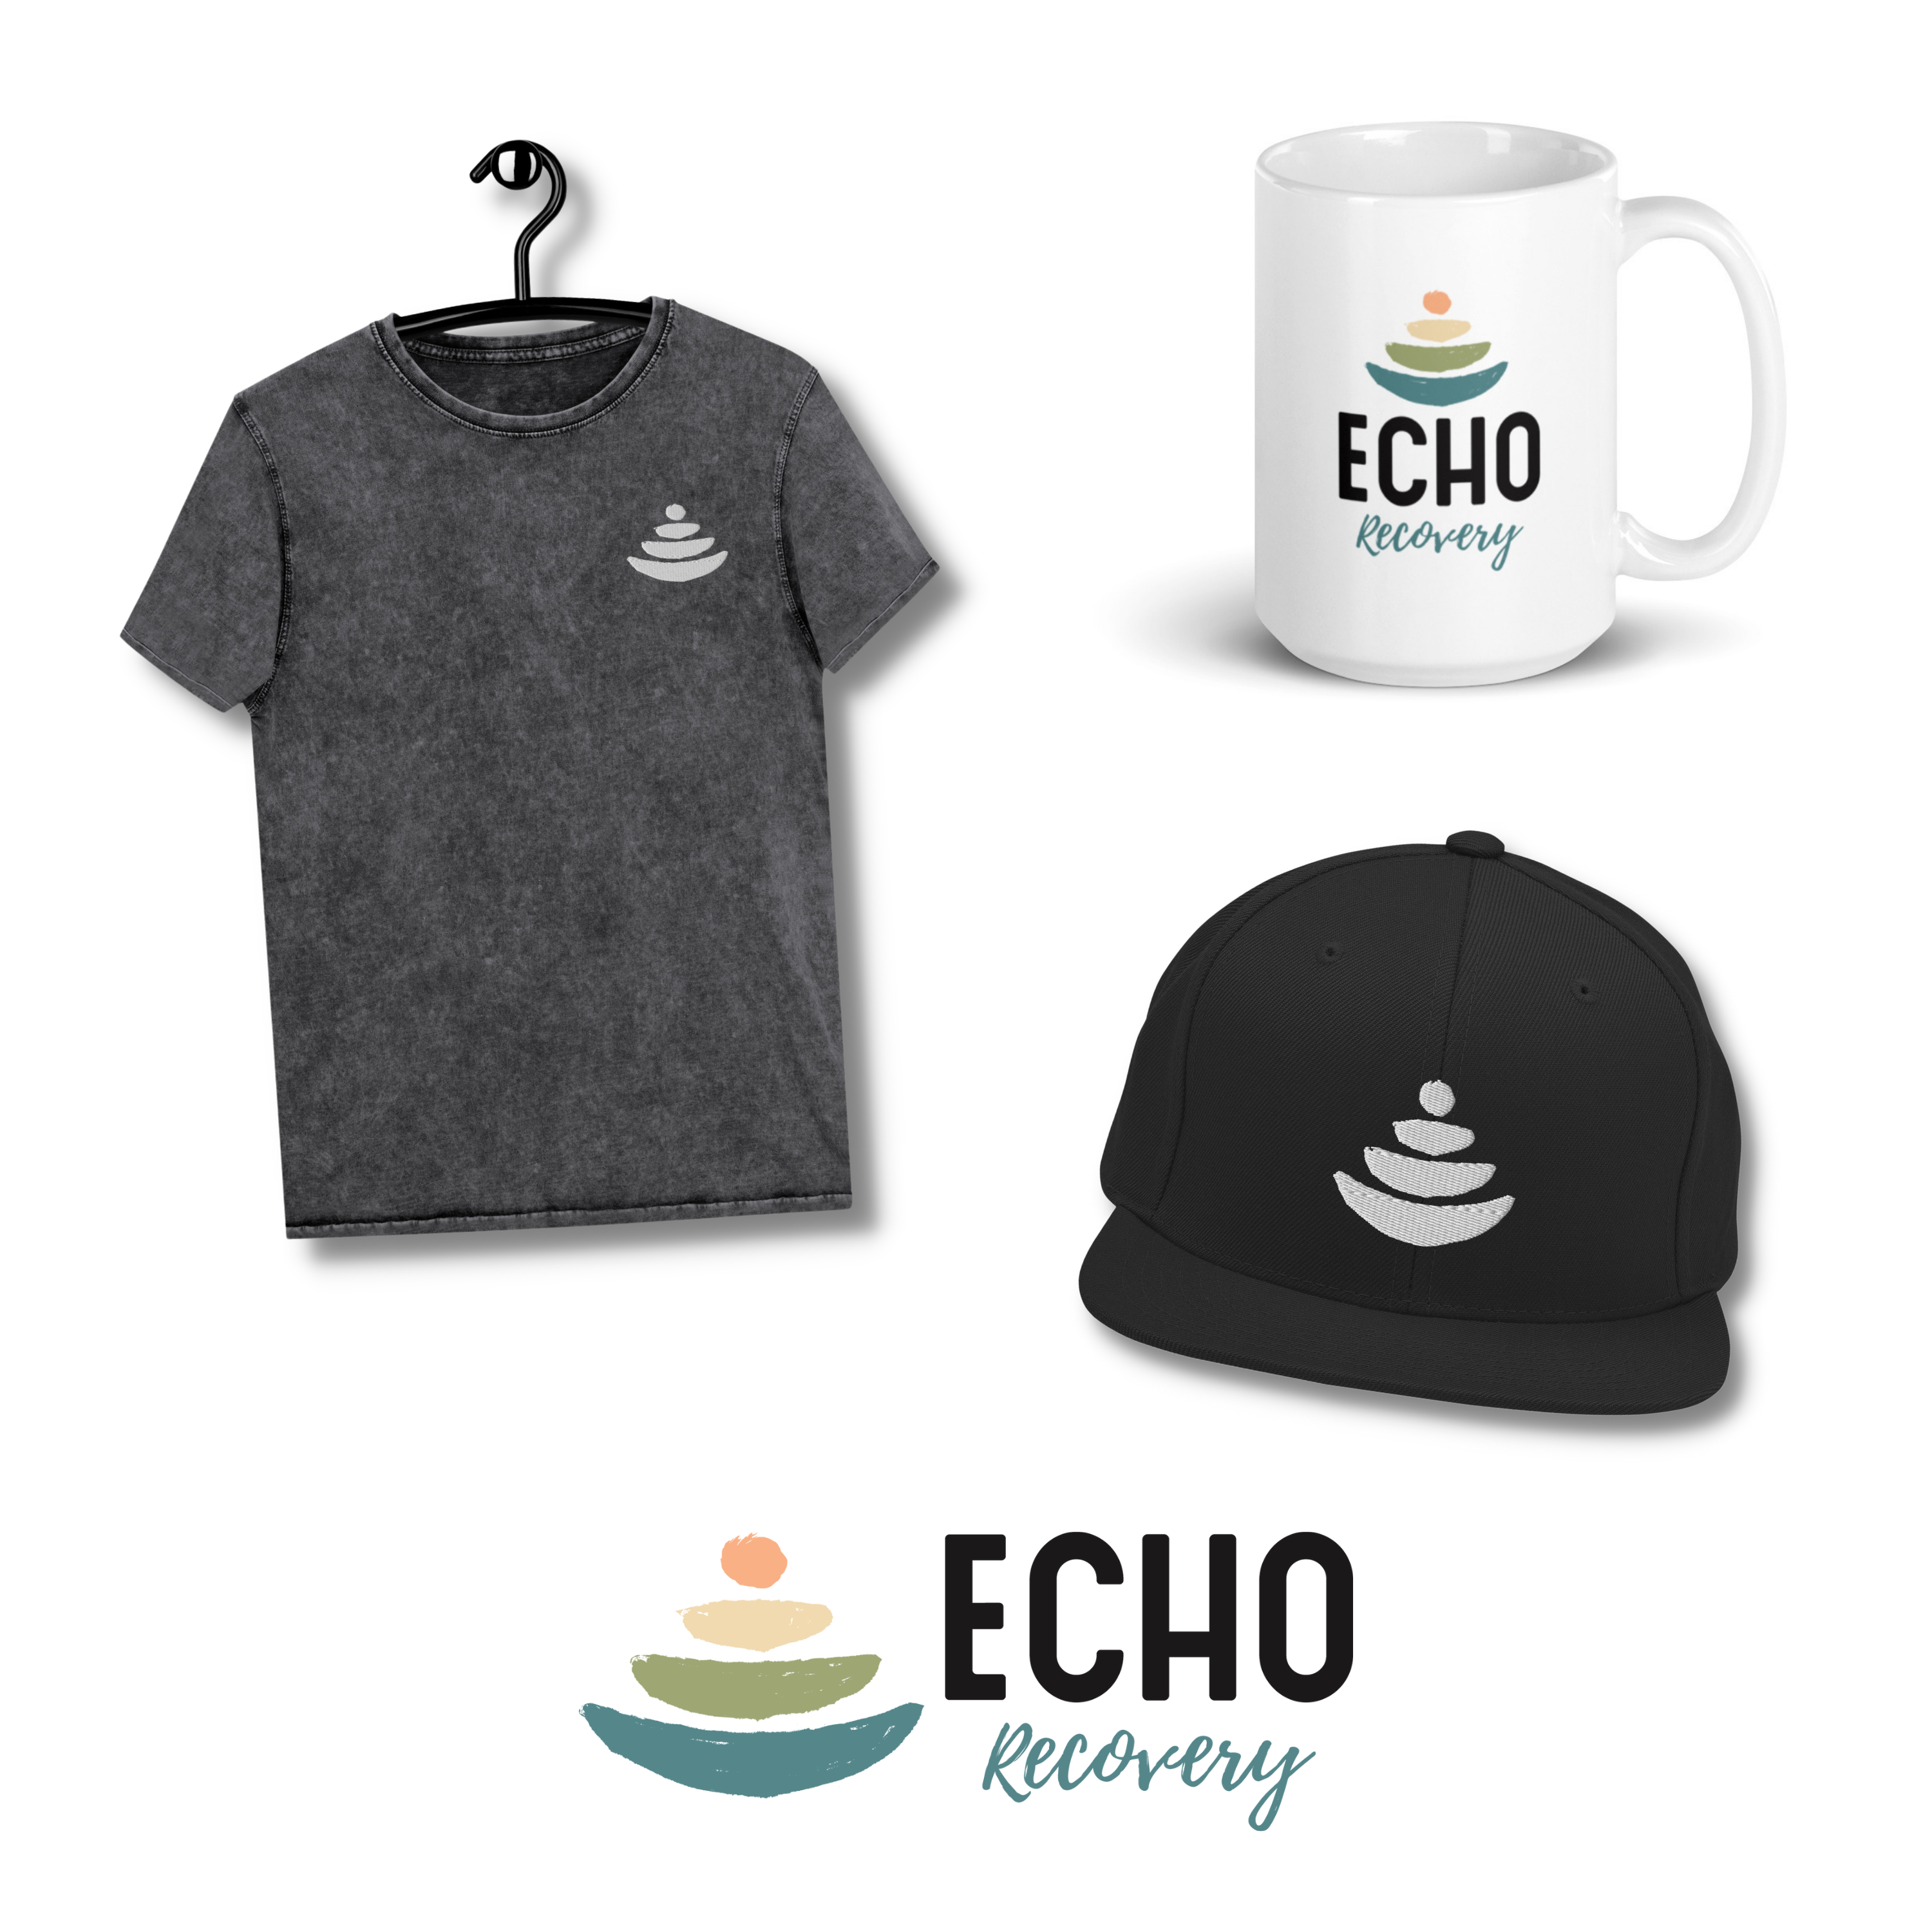 ECHO Recovery Merchandise